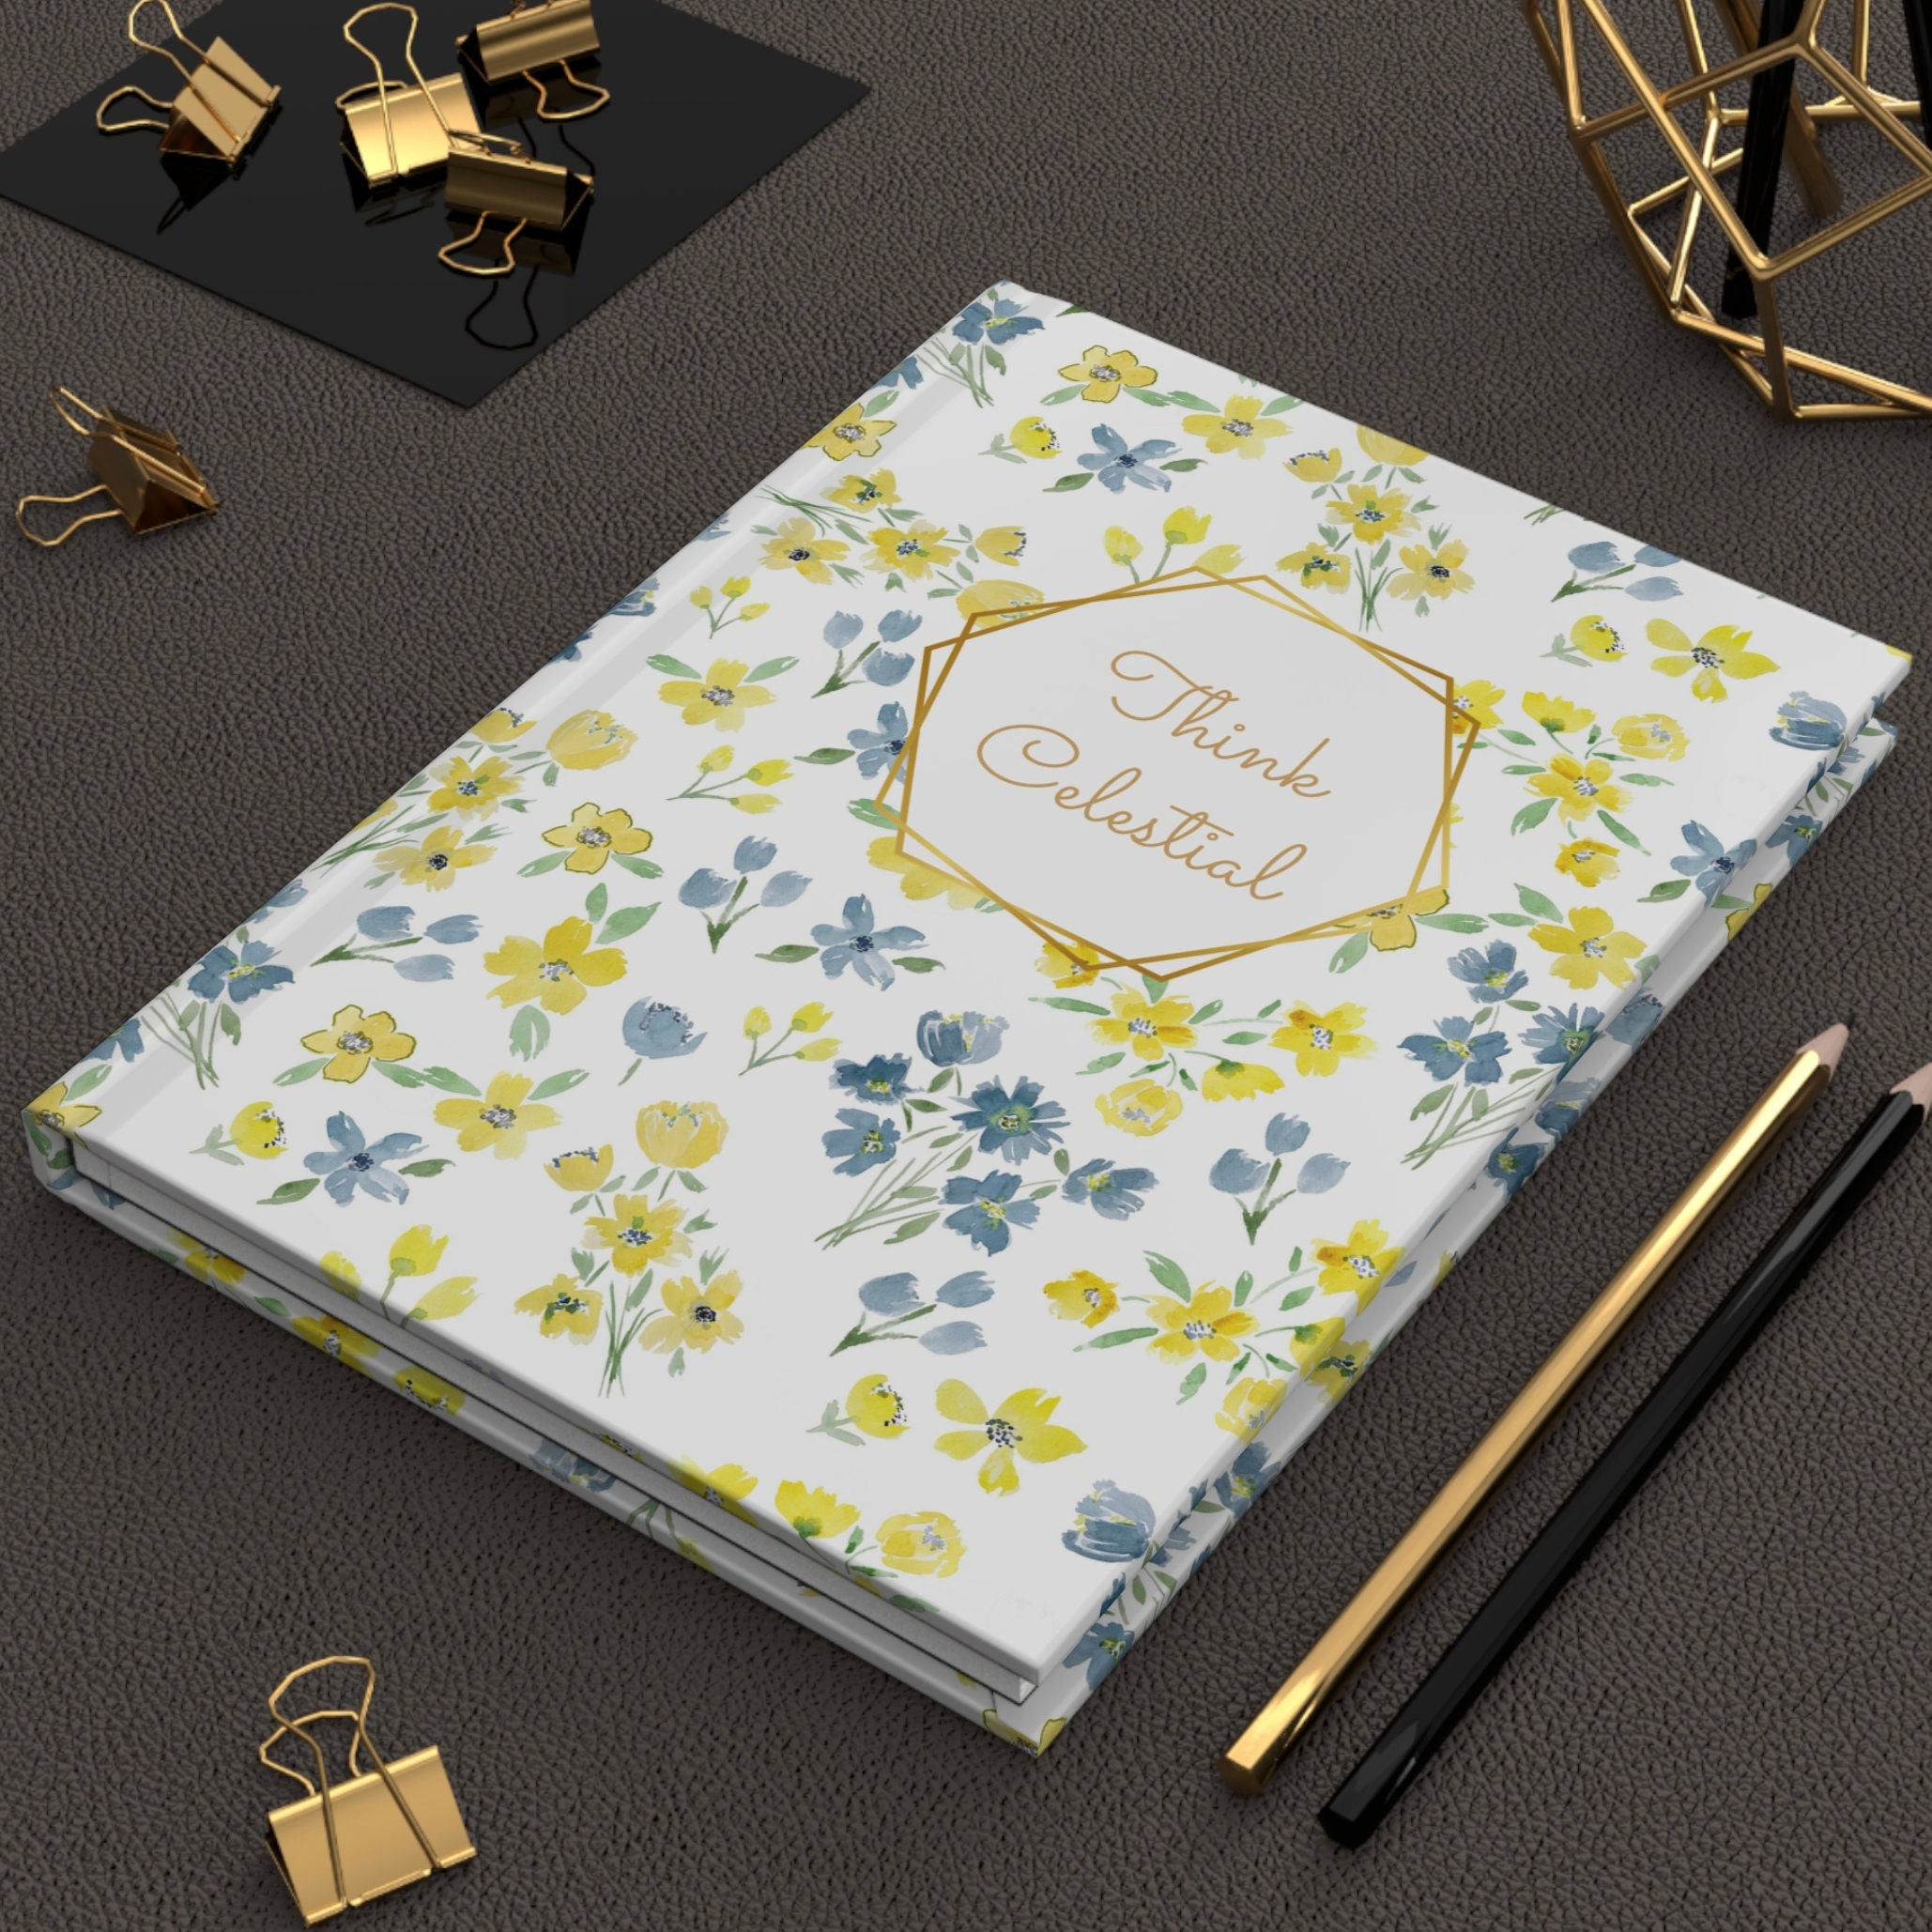 Celestial Velvet Journal with Necklace & Pen – Make It Real